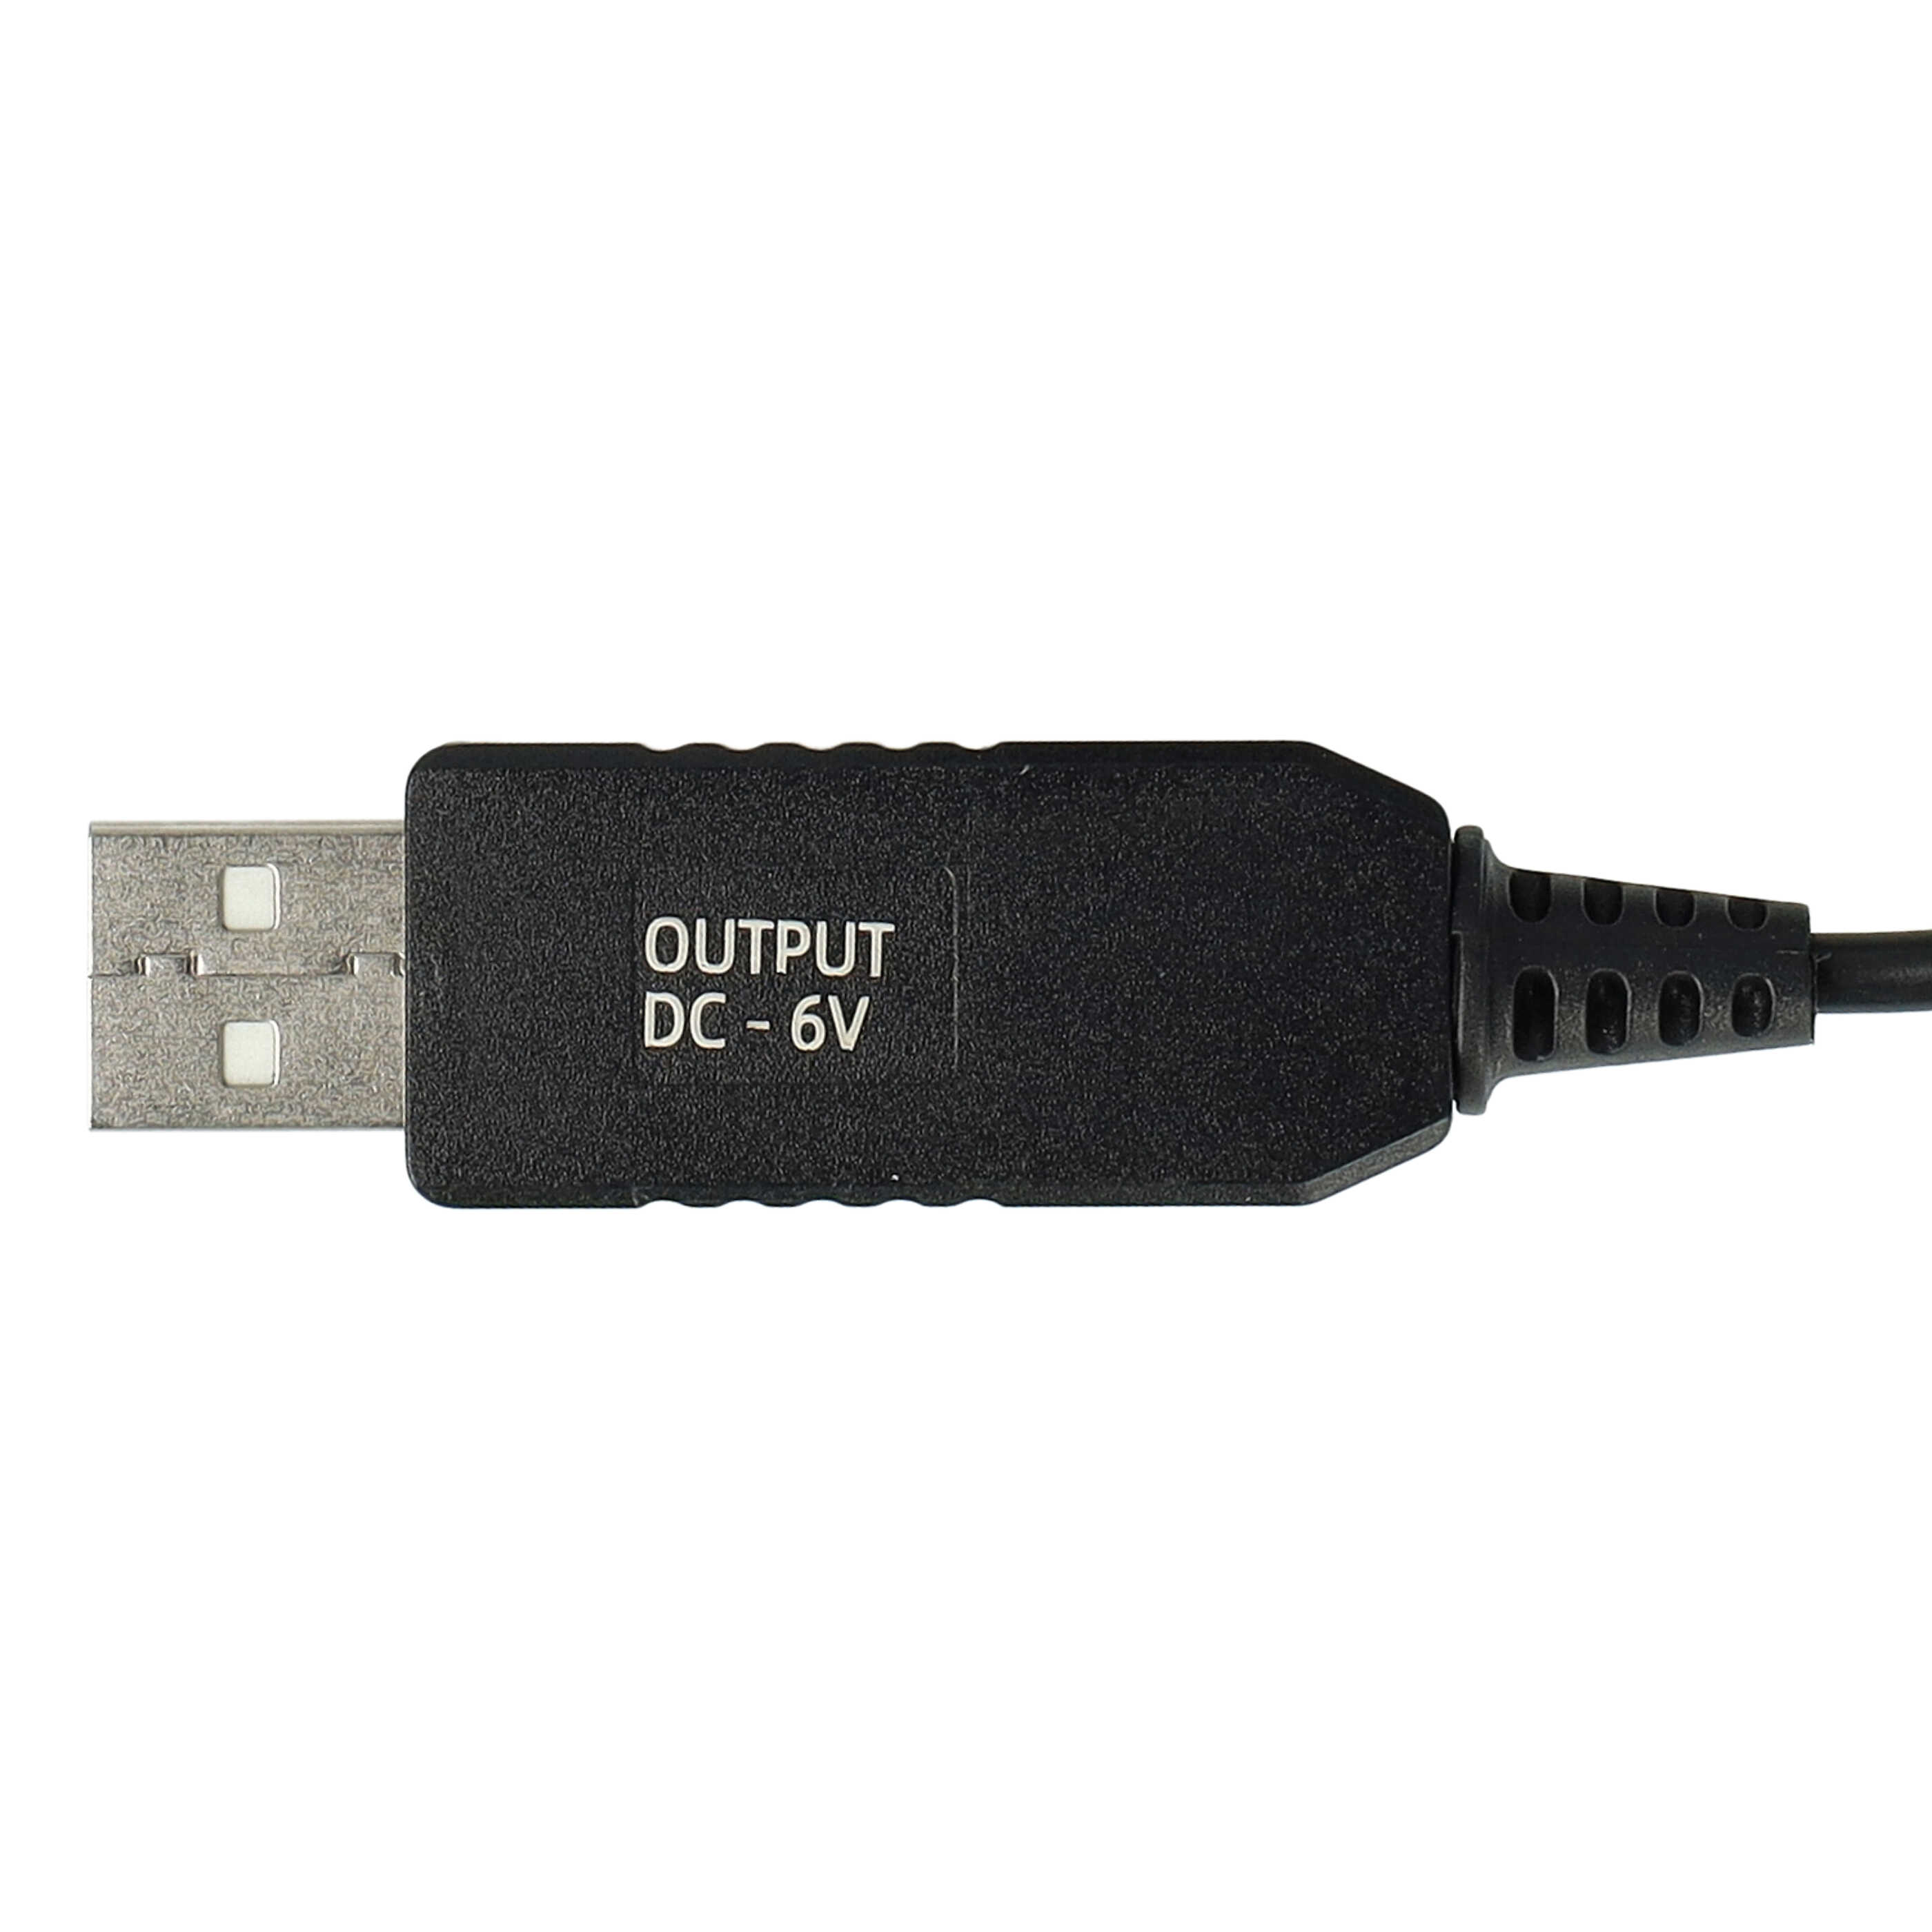 Cable de carga USB reemplaza Braun 491-5691, 81615618, 8161561, 81747675 para afeitadoras Braun - 120 cm